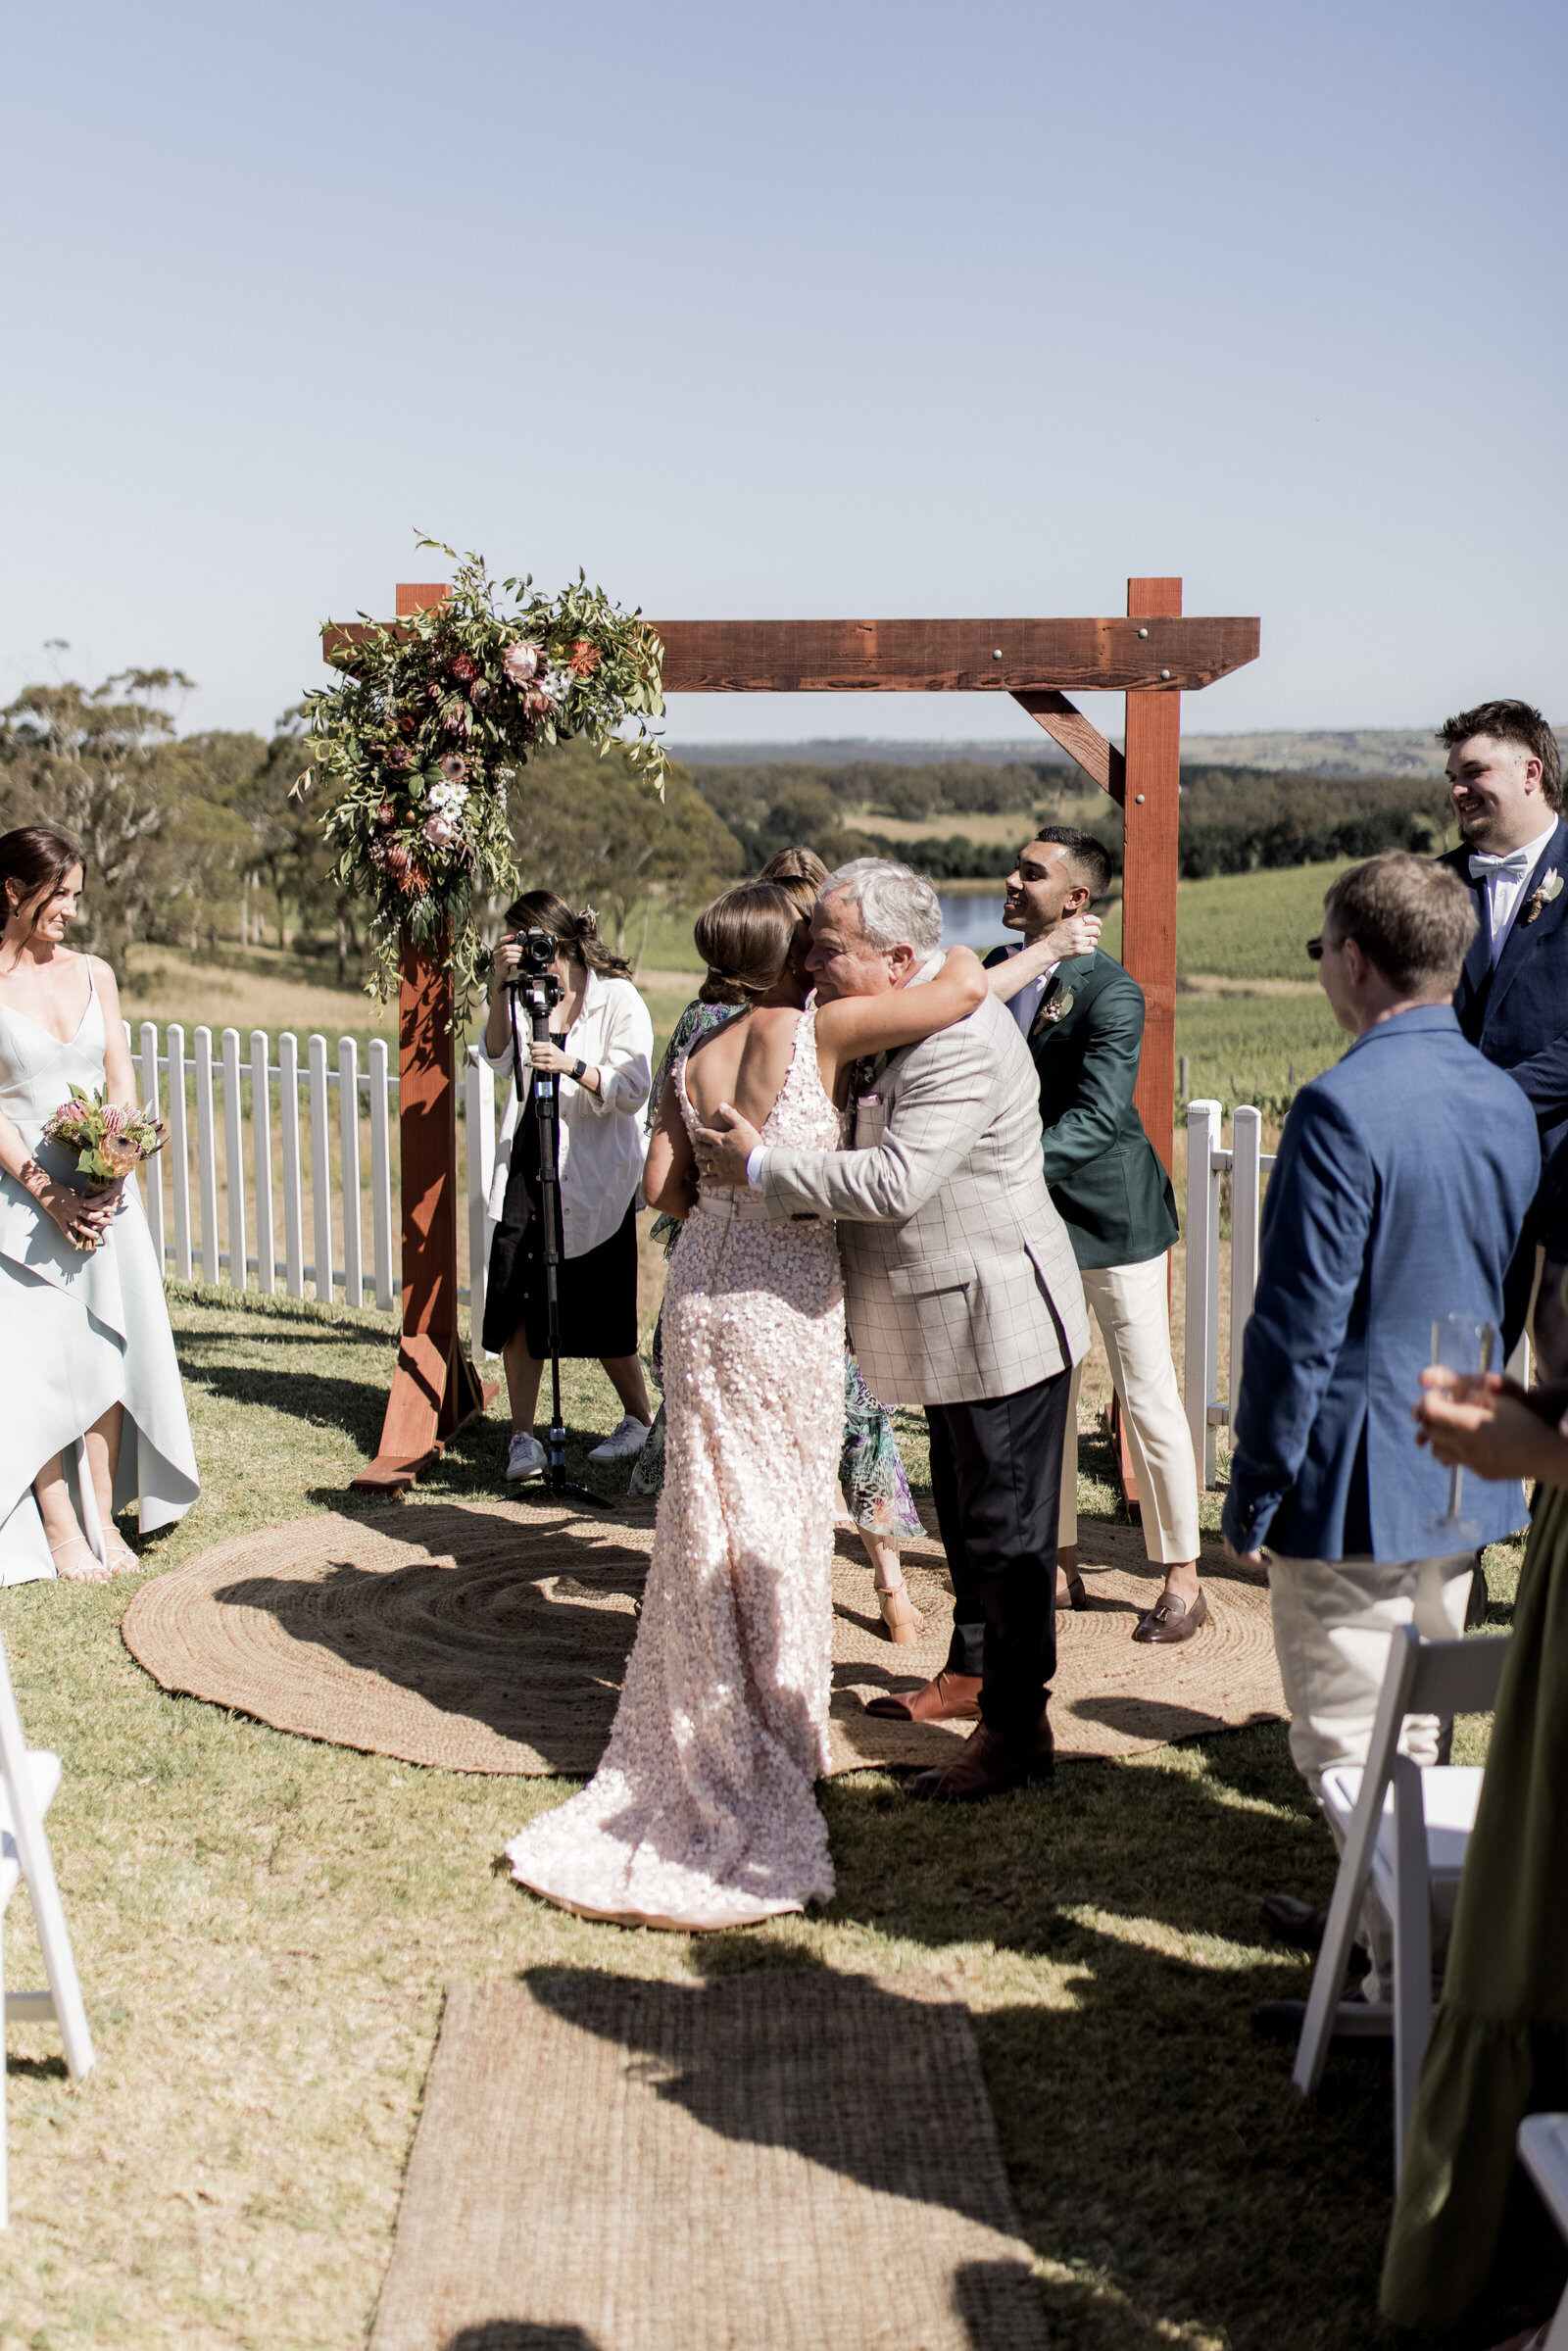 Chloe-Benny-Rexvil-Photography-Adelaide-Wedding-Photographer-171